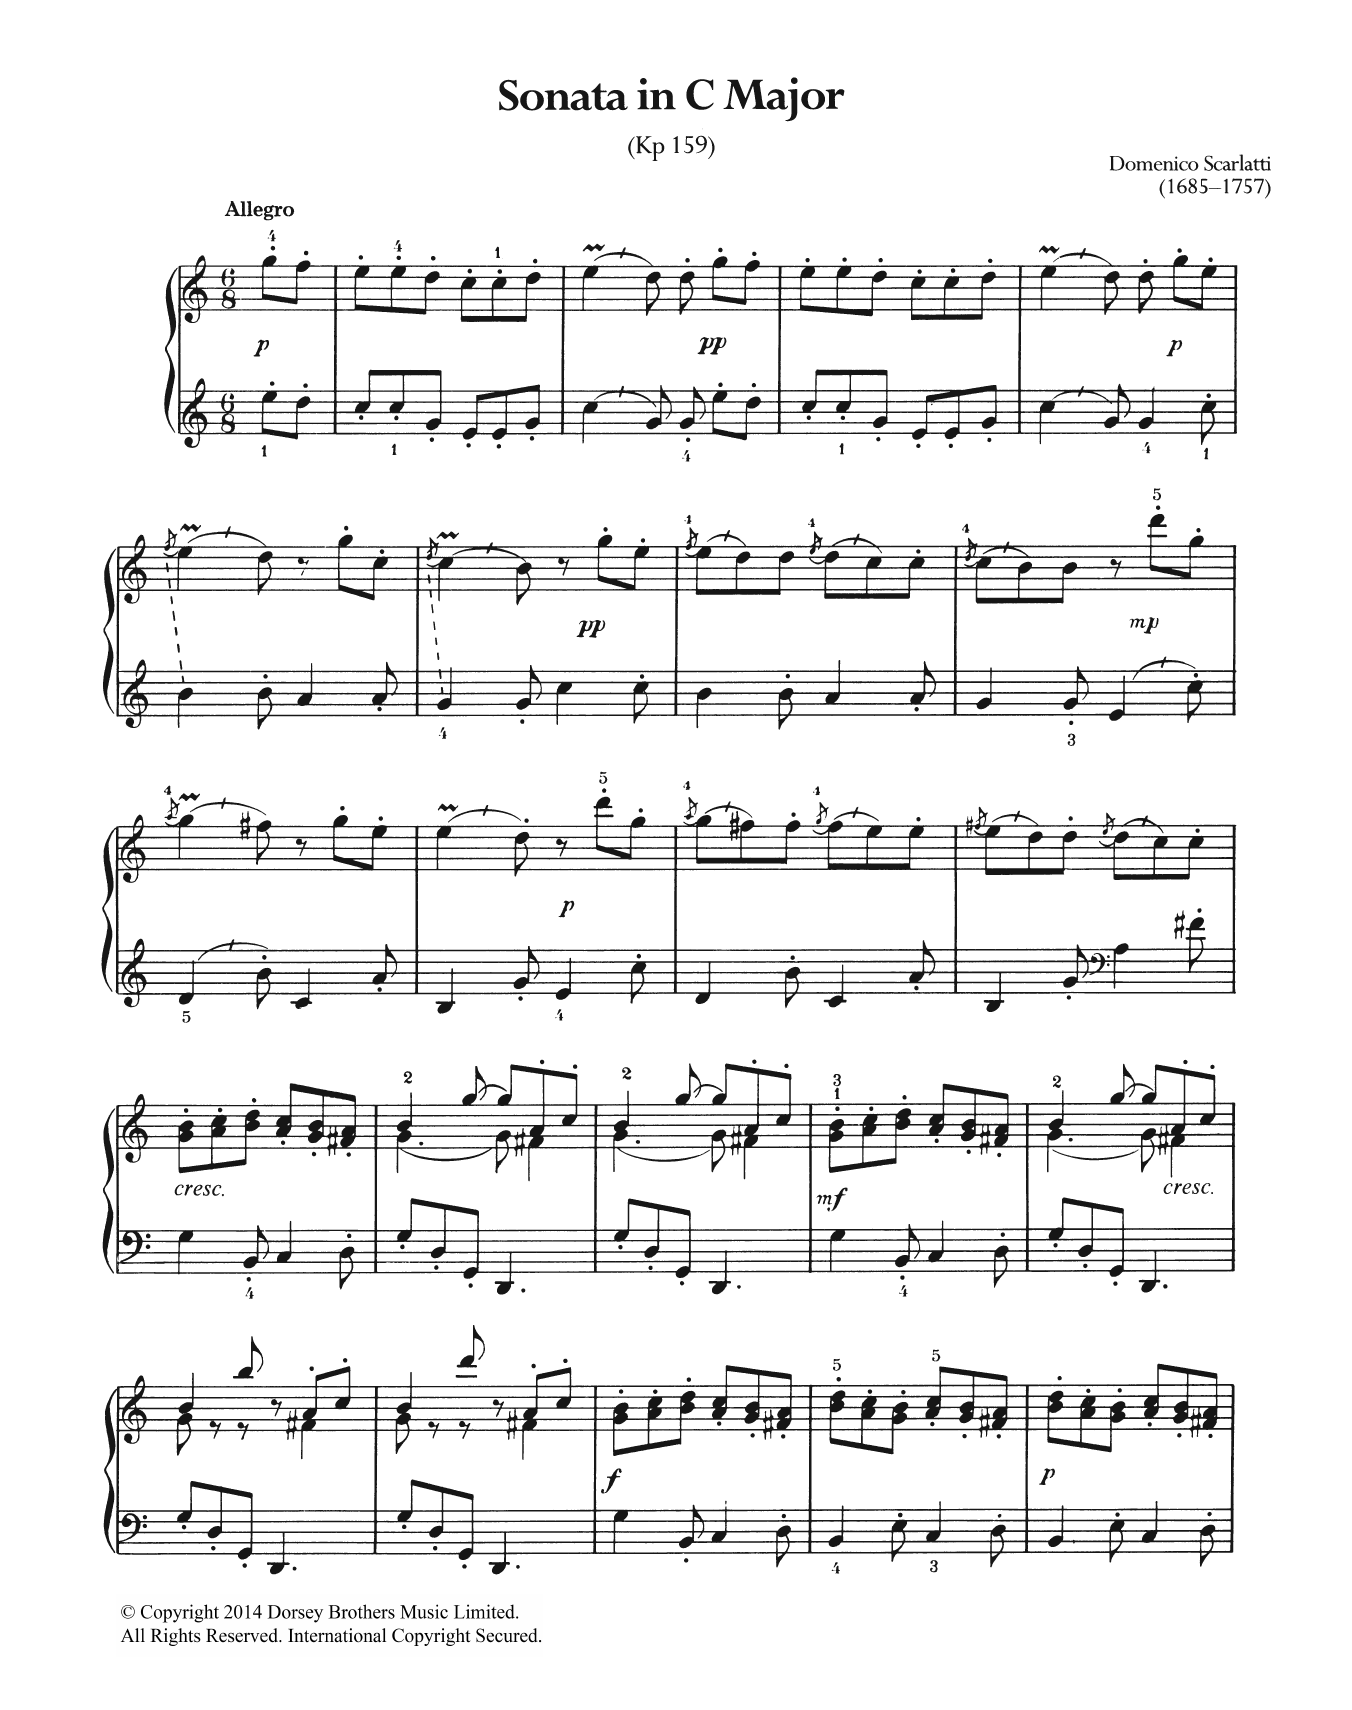 Domenico Scarlatti Sonata In C Major, K.159 Sheet Music Notes & Chords for Piano - Download or Print PDF